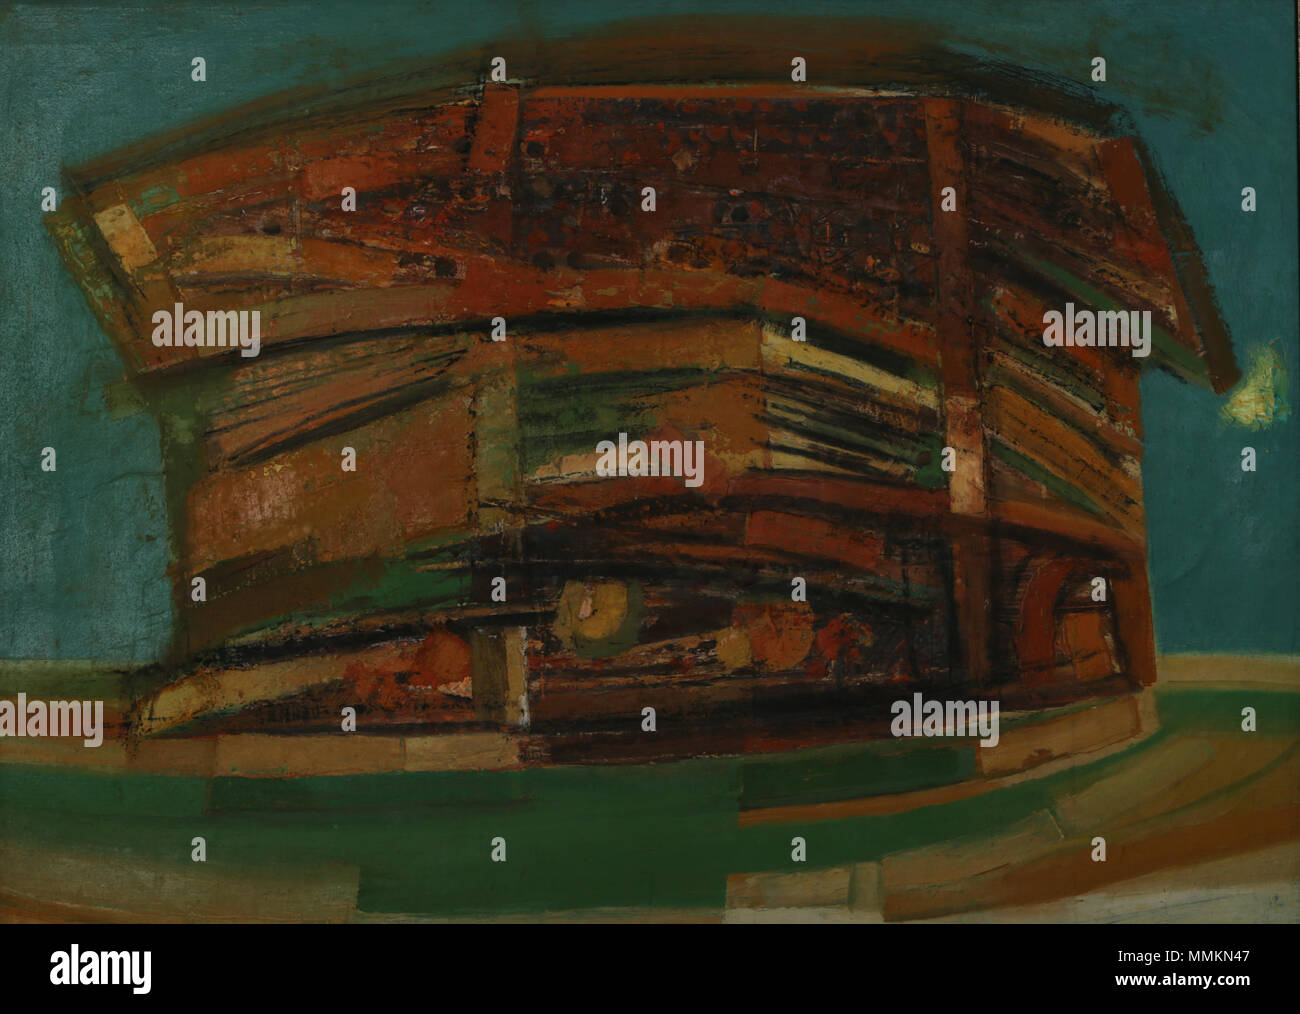 . Anglais : Peinture AMBAR par Bozur Ivanovic . 19 octobre 1989. Bozur Bozur 95 Ivanovic Ivanovic, Usamljeni platnu ulje ambar, na Banque D'Images